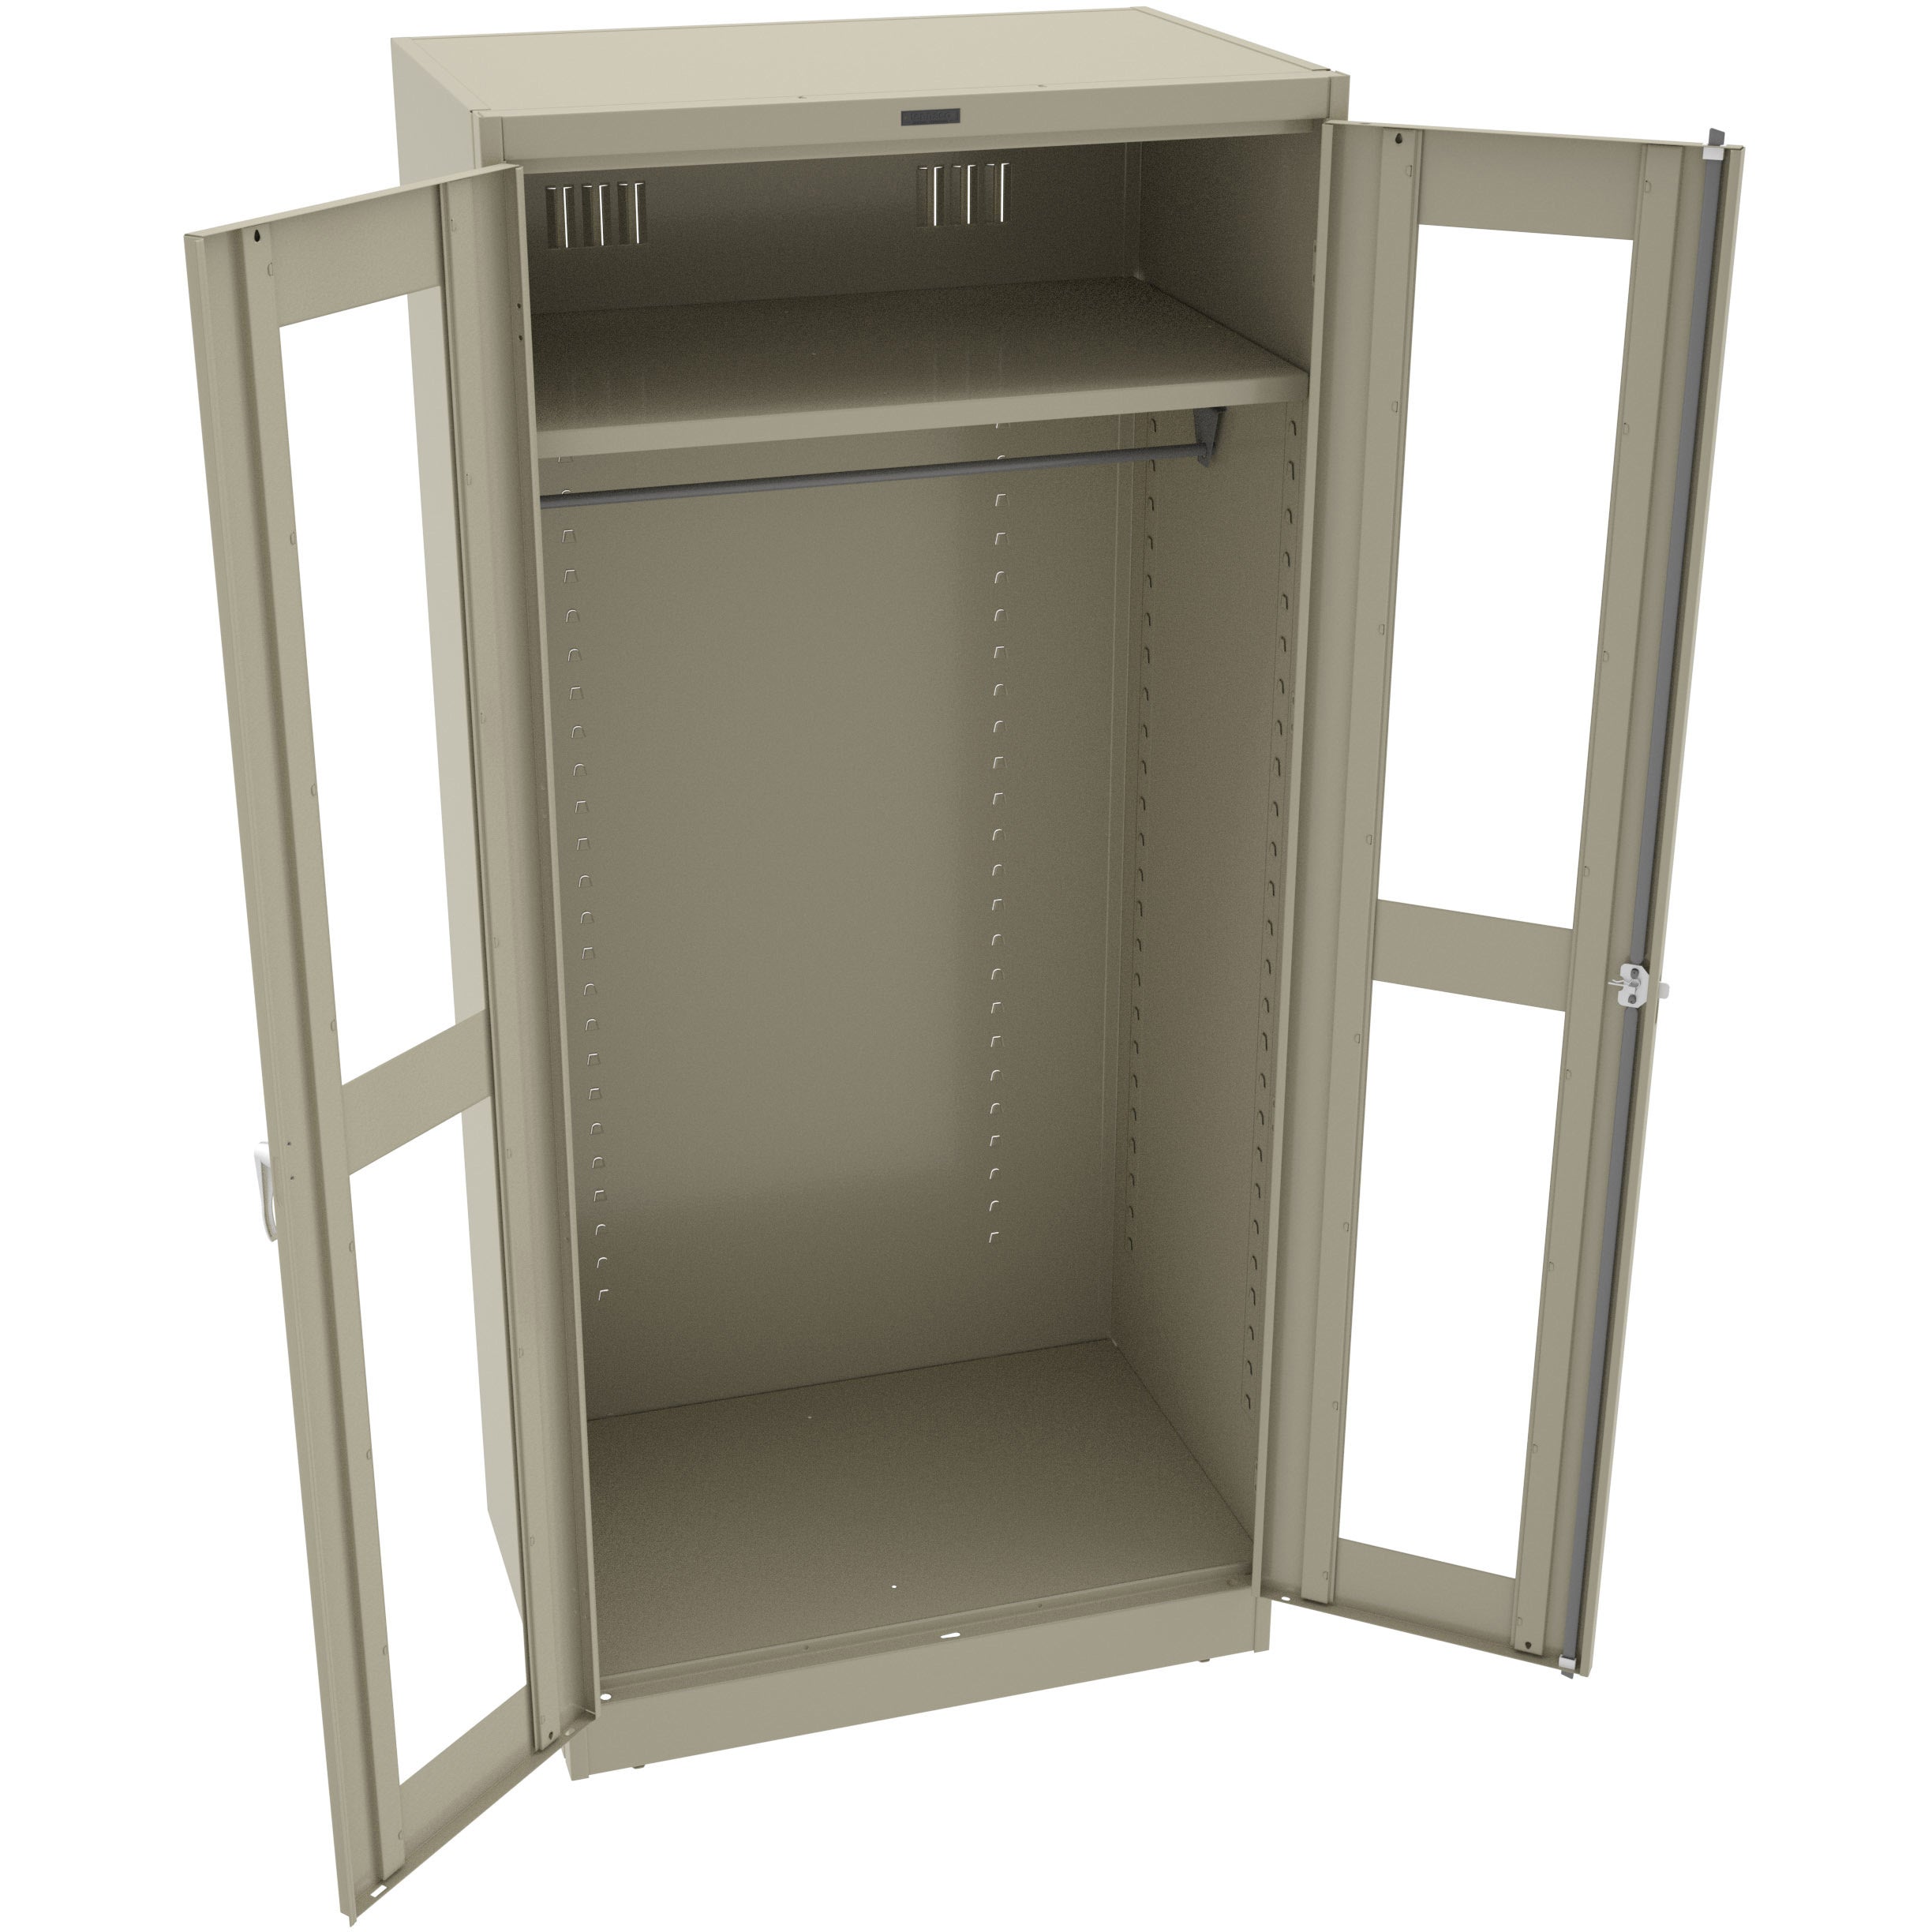 Tennsco 78" High Deluxe Wardrobe Cabinet with C-Thru Doors - Assembled, CVD7824W